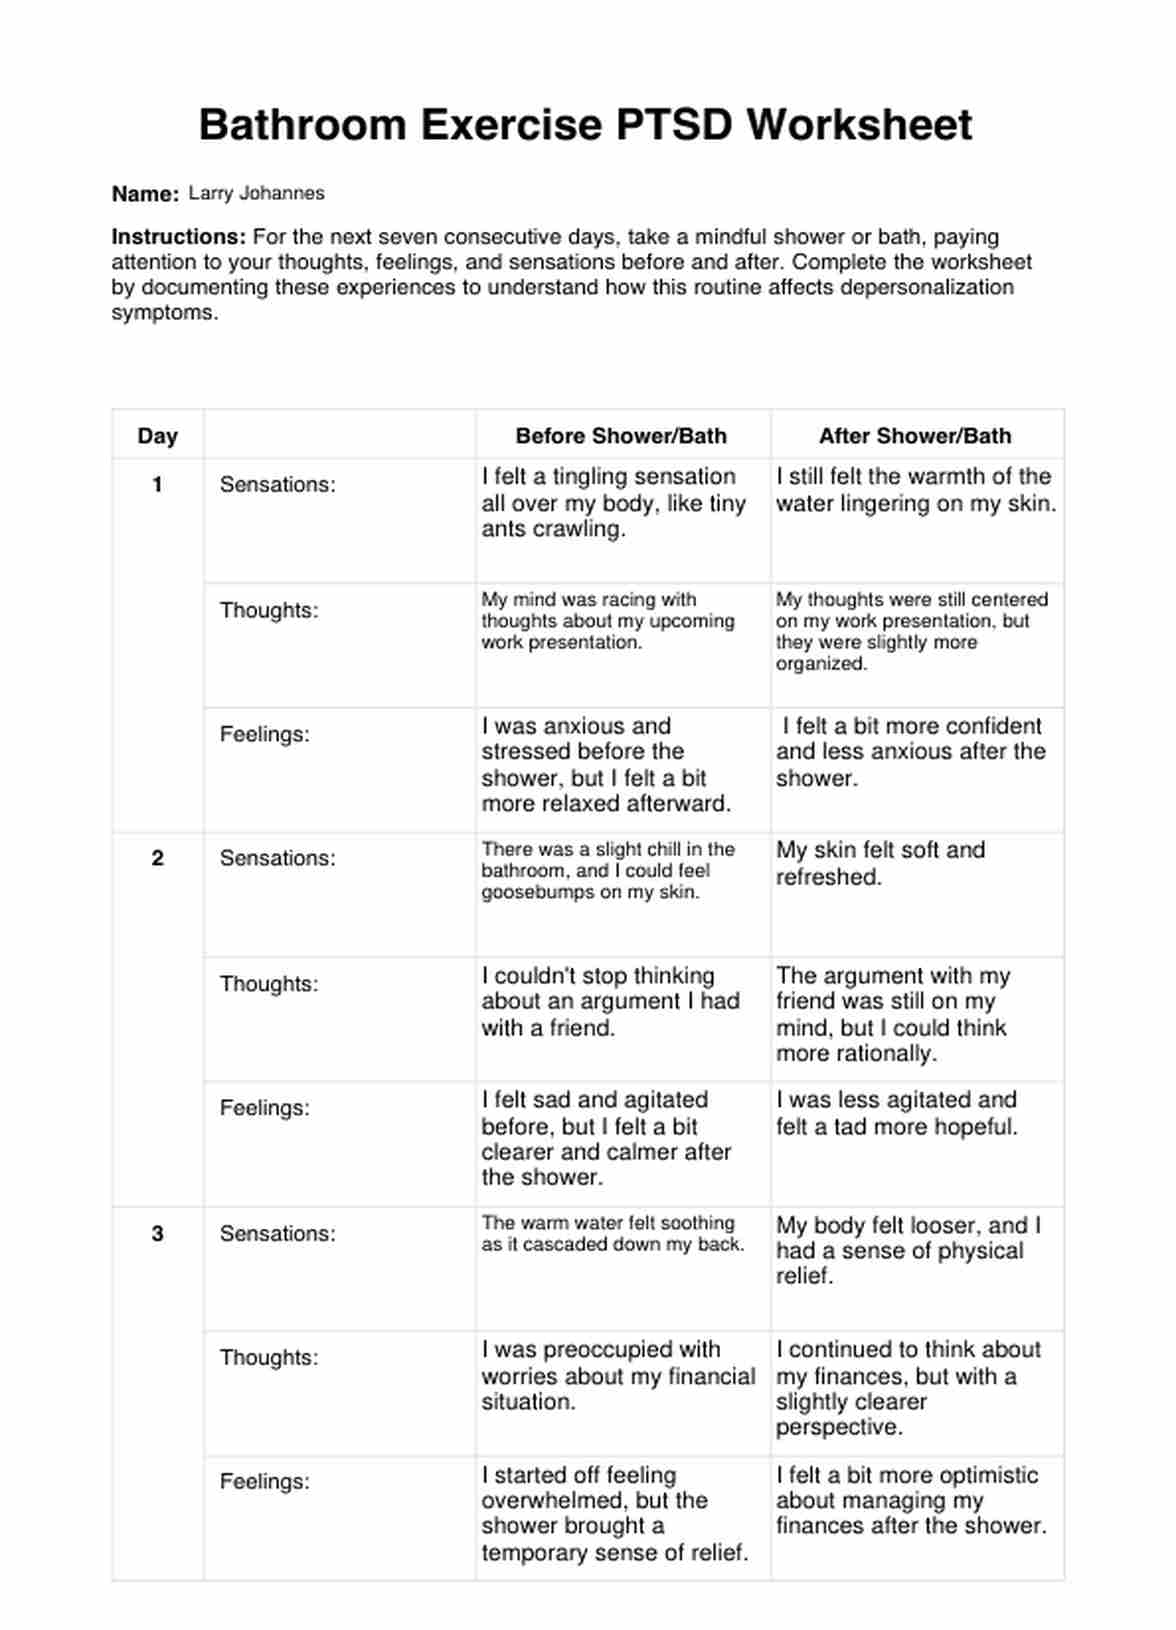 Bathroom Exercise PTSD Worksheet PDF Example